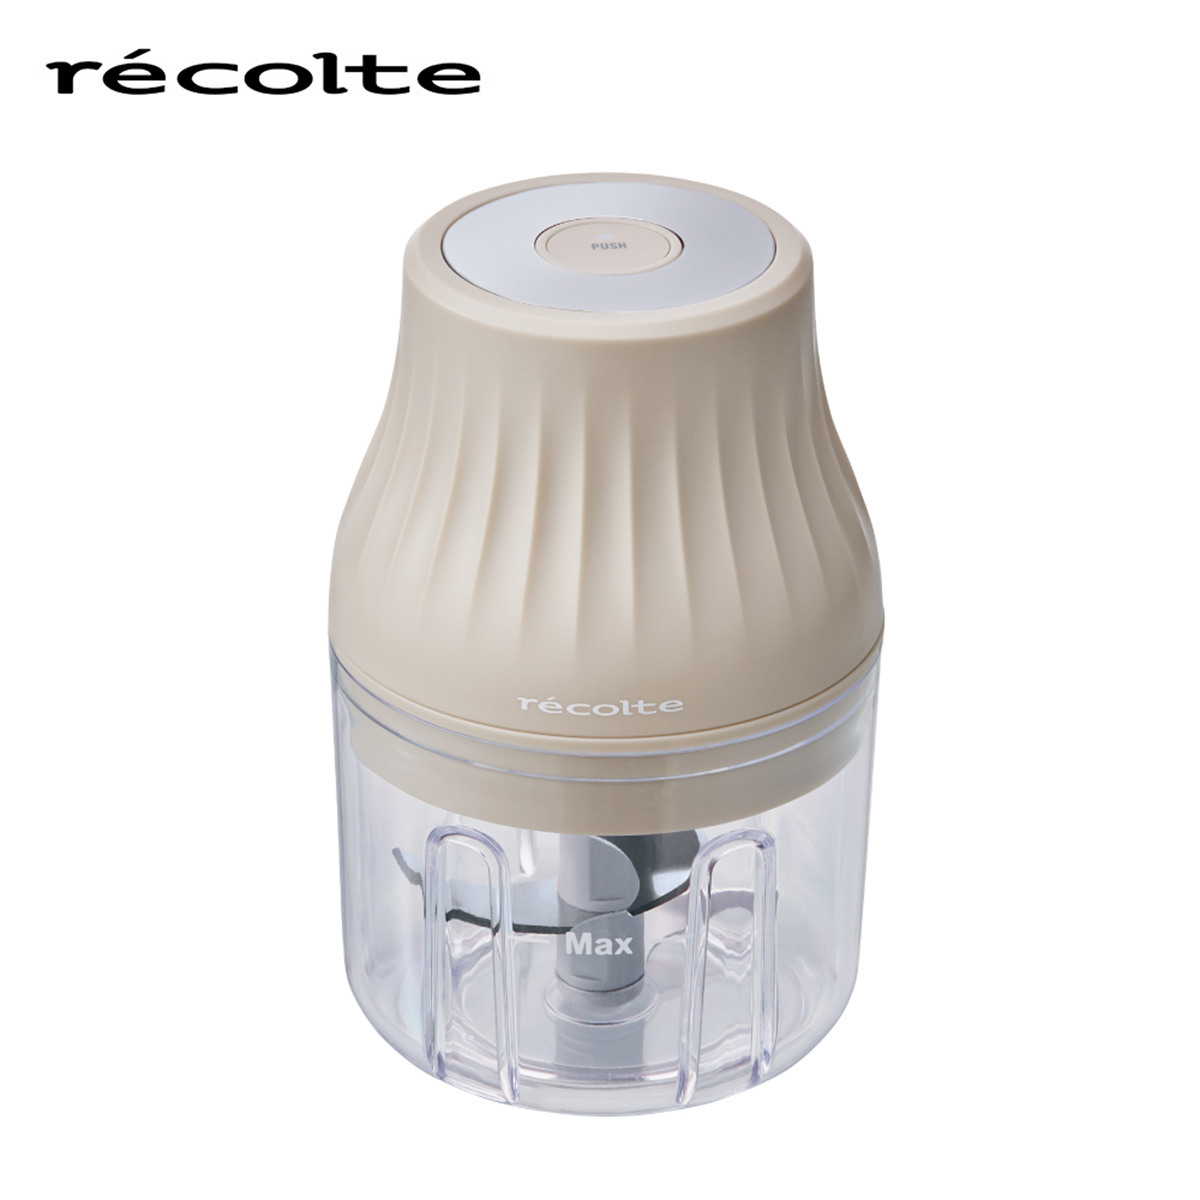 recolte(レコルト) コードレス薬味チョッパー クリームホワイト RCP-4(W)